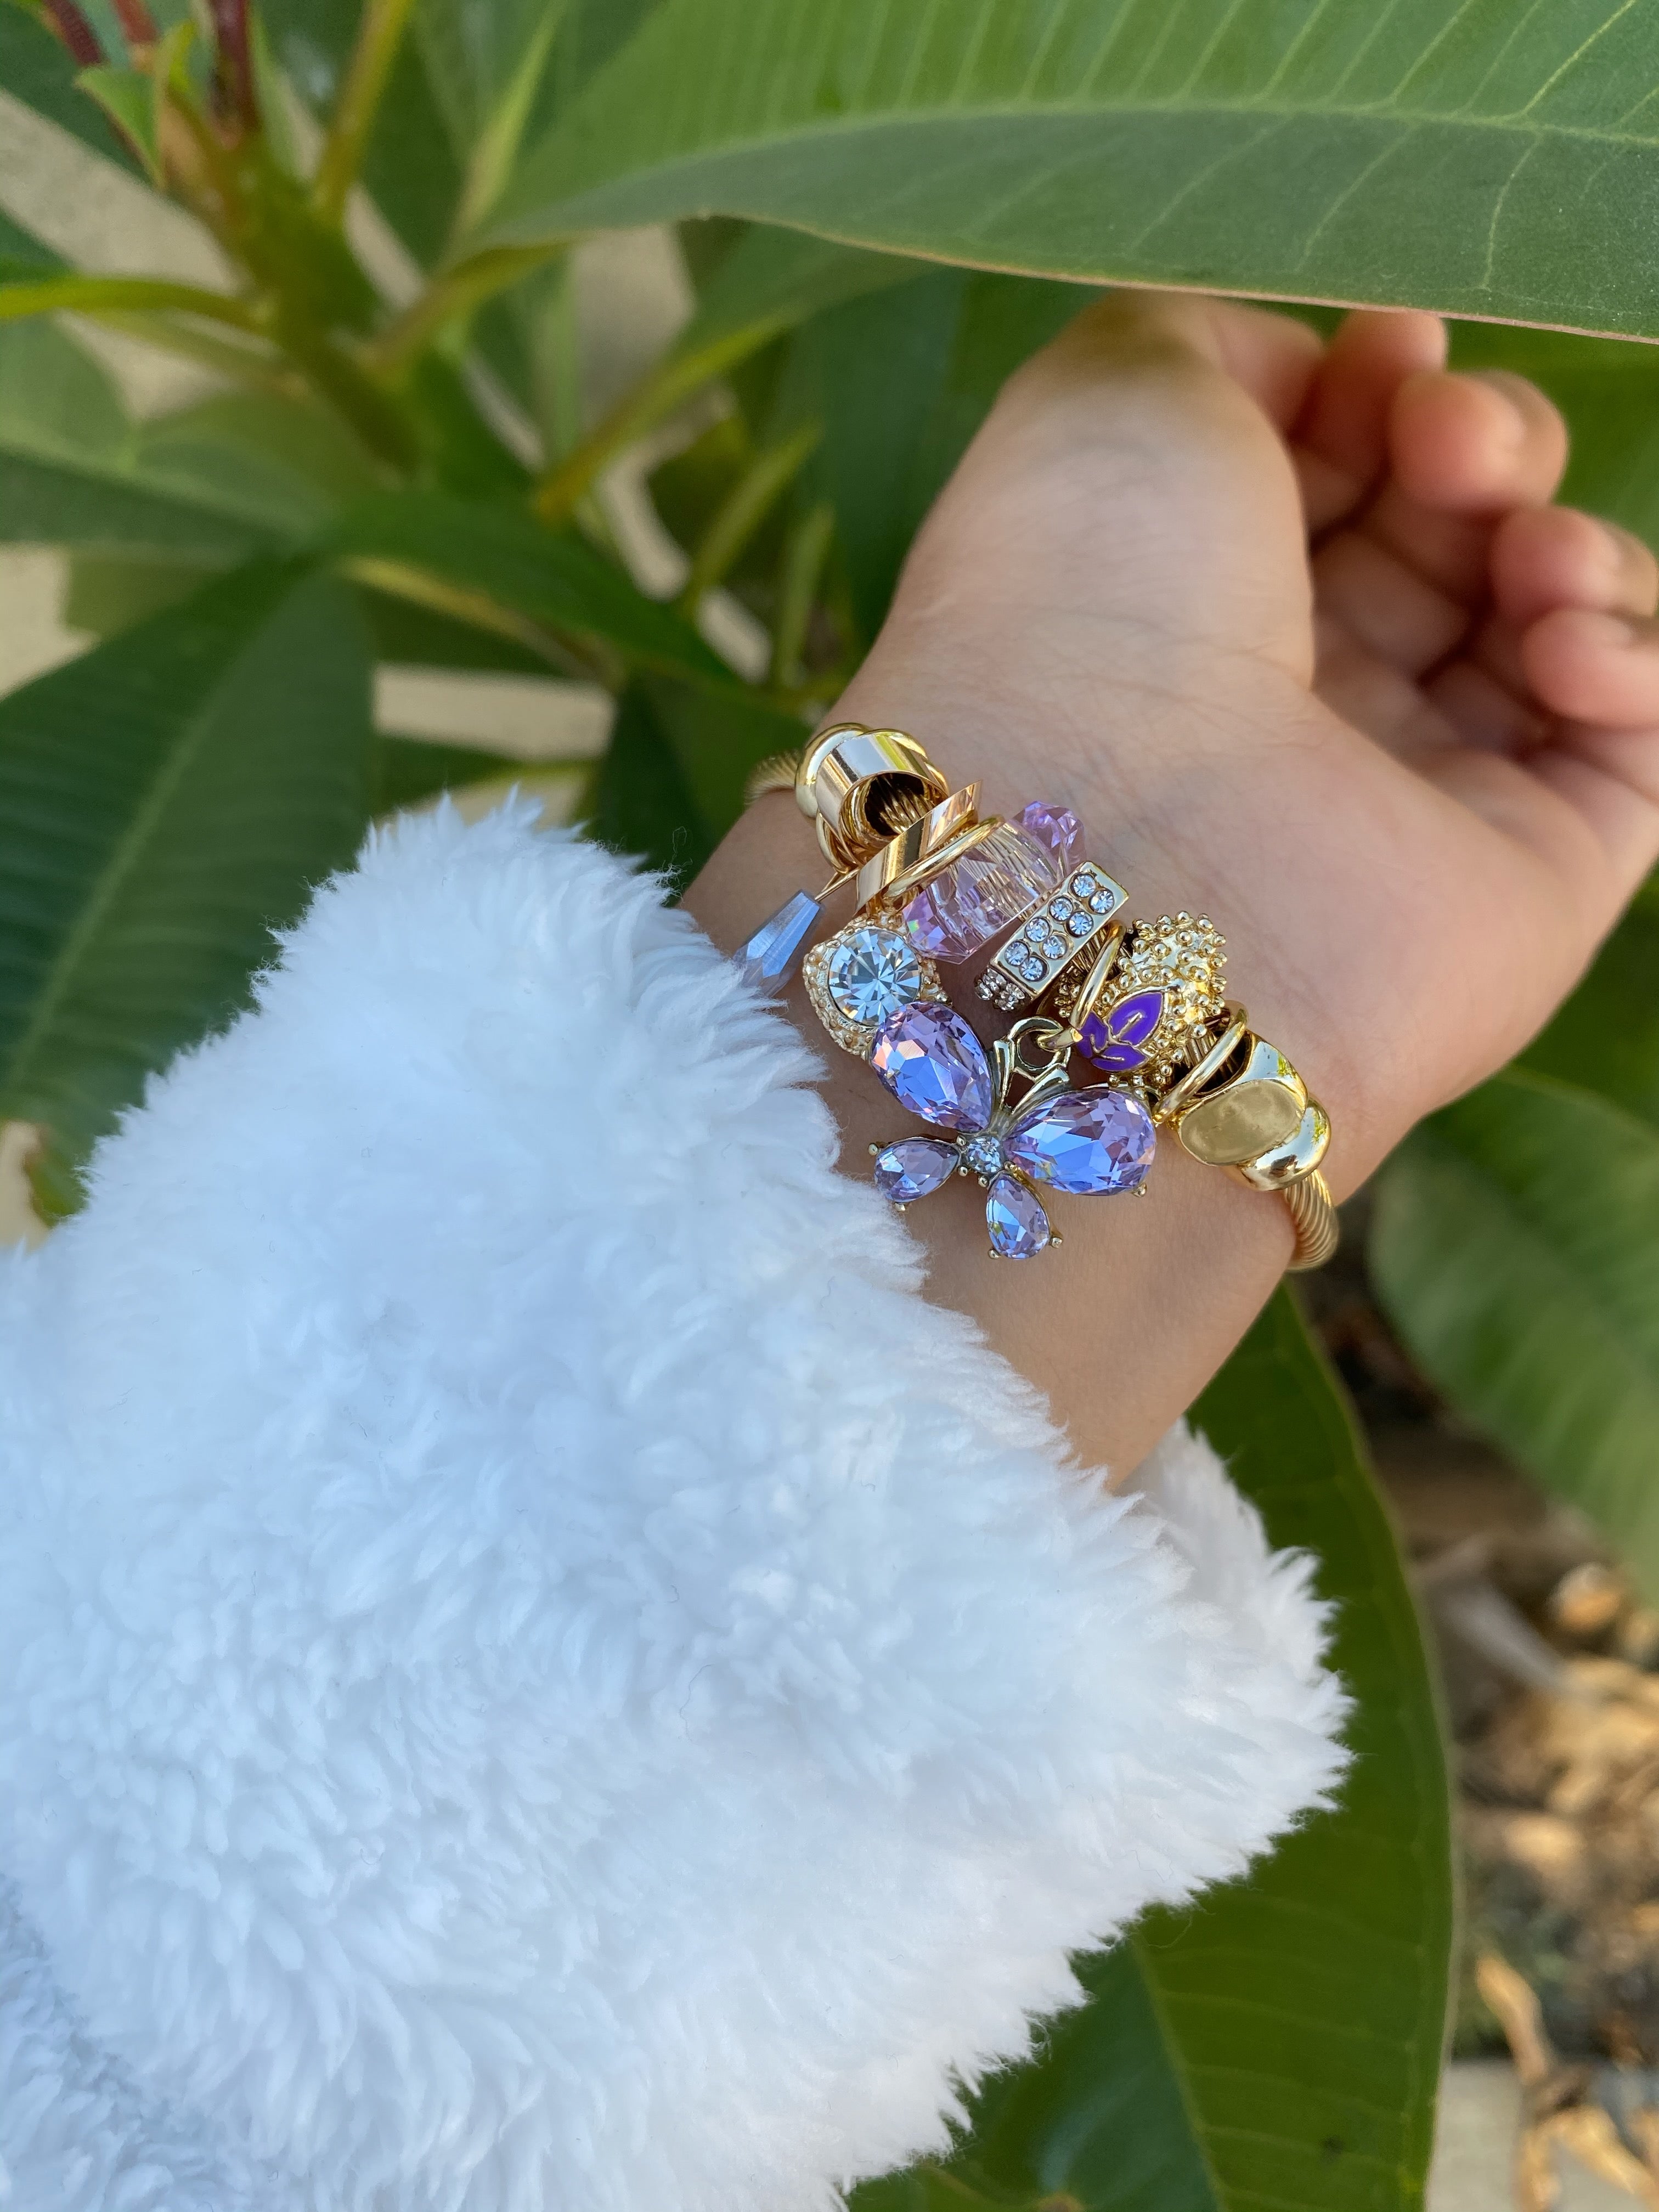 Butterfly charm bracelet